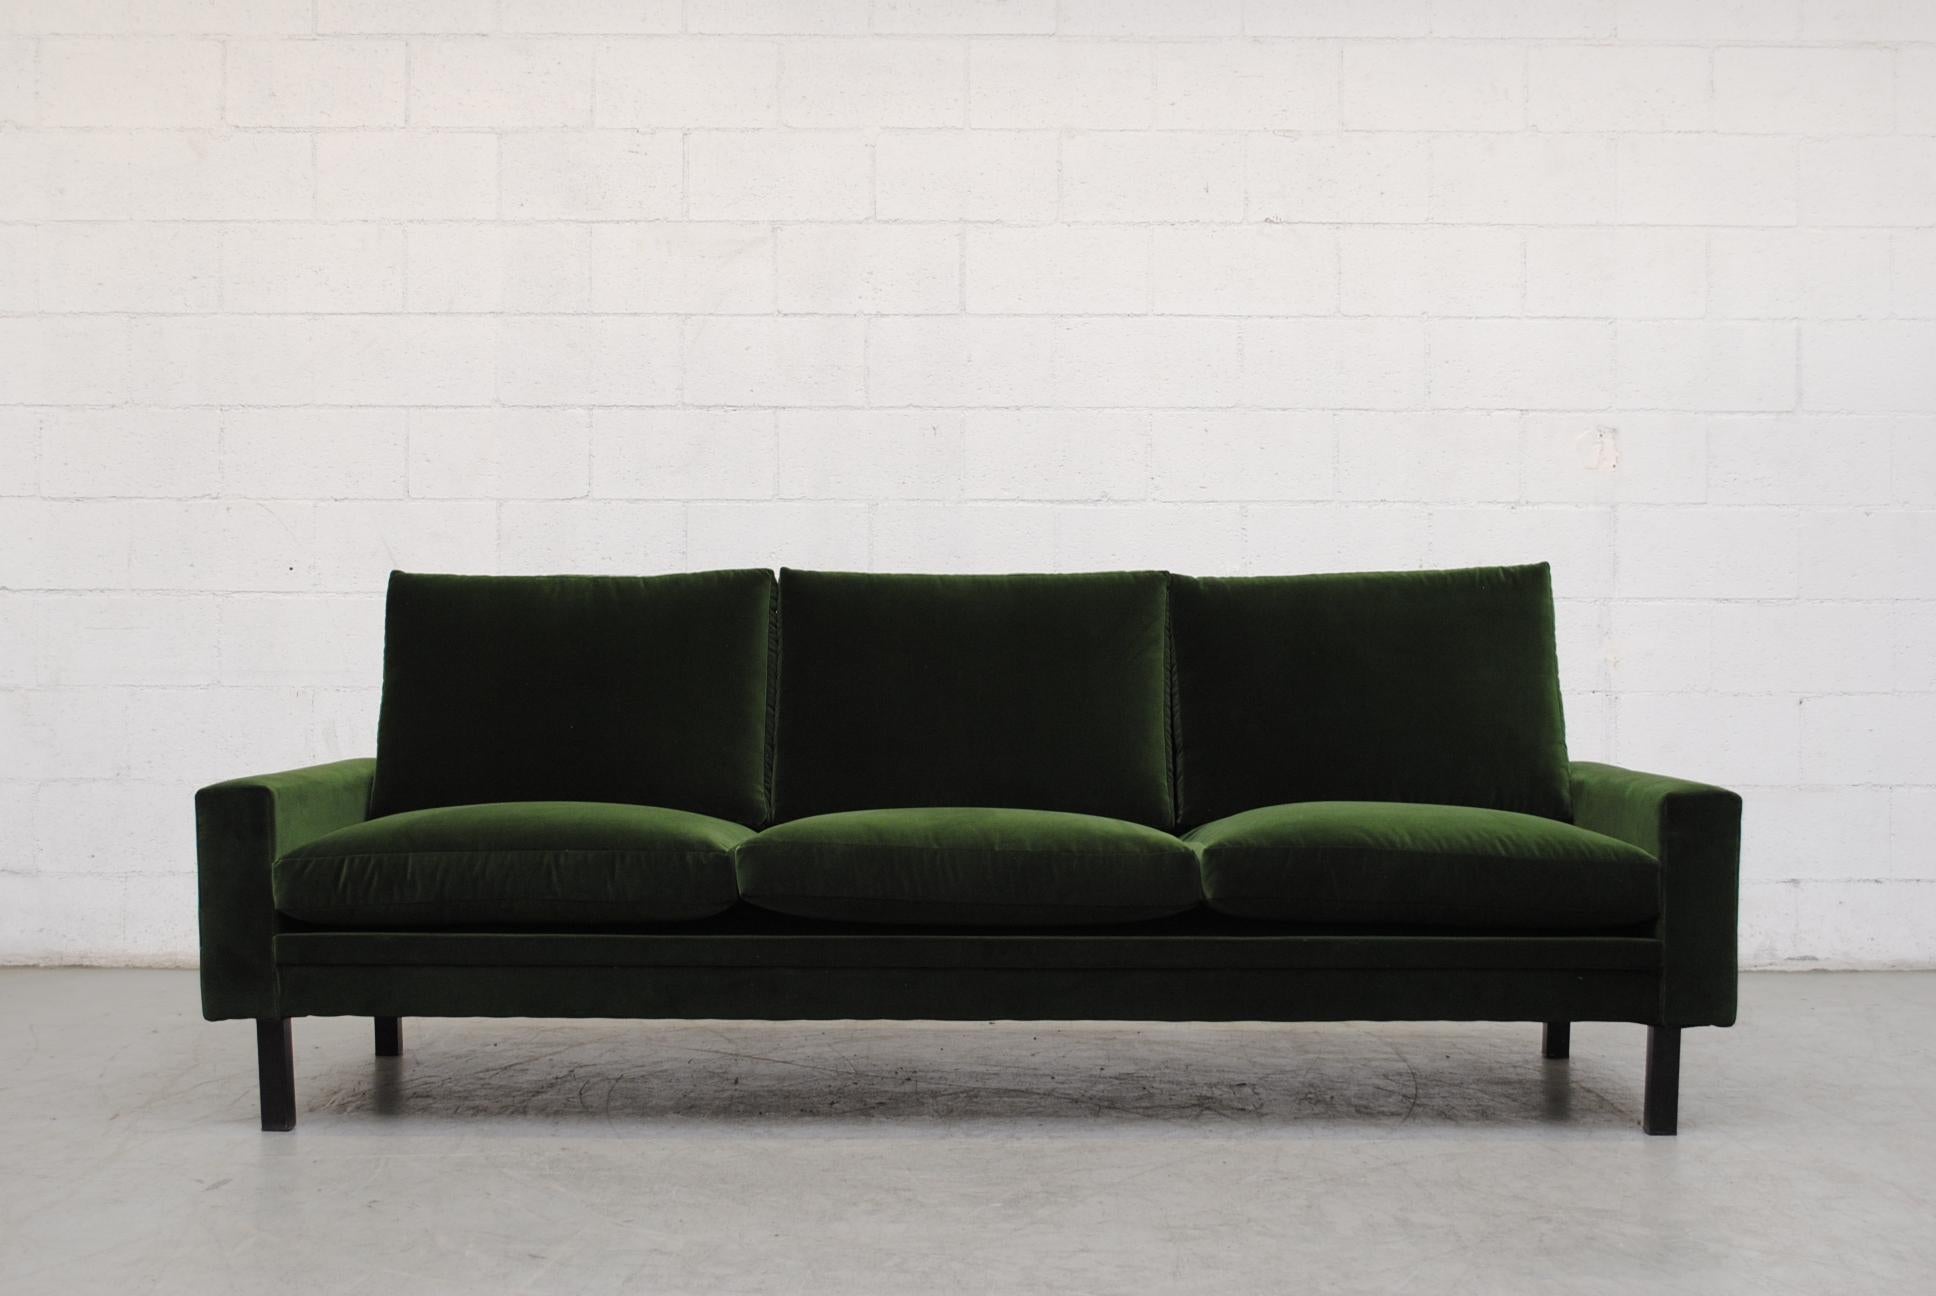 Handsome midcentury 3-seat streamlined sofa upholstered in emerald green velvet, minimal wear. Legs in original condition. Stunning!